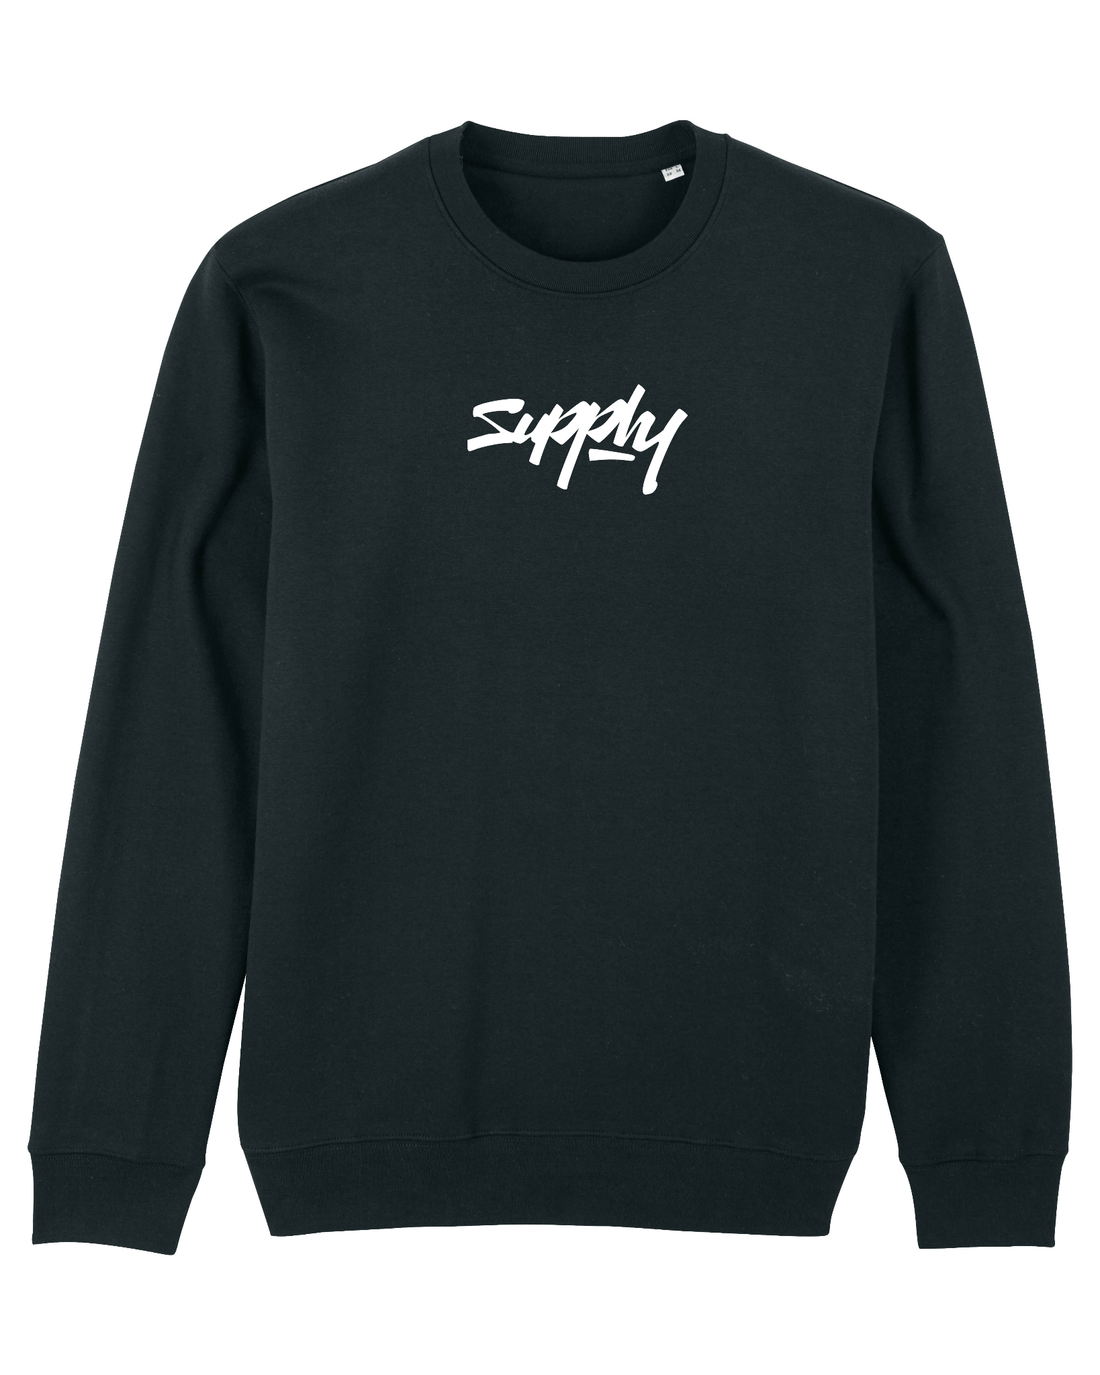 Black Skater Sweatshirt, Supply Front Print